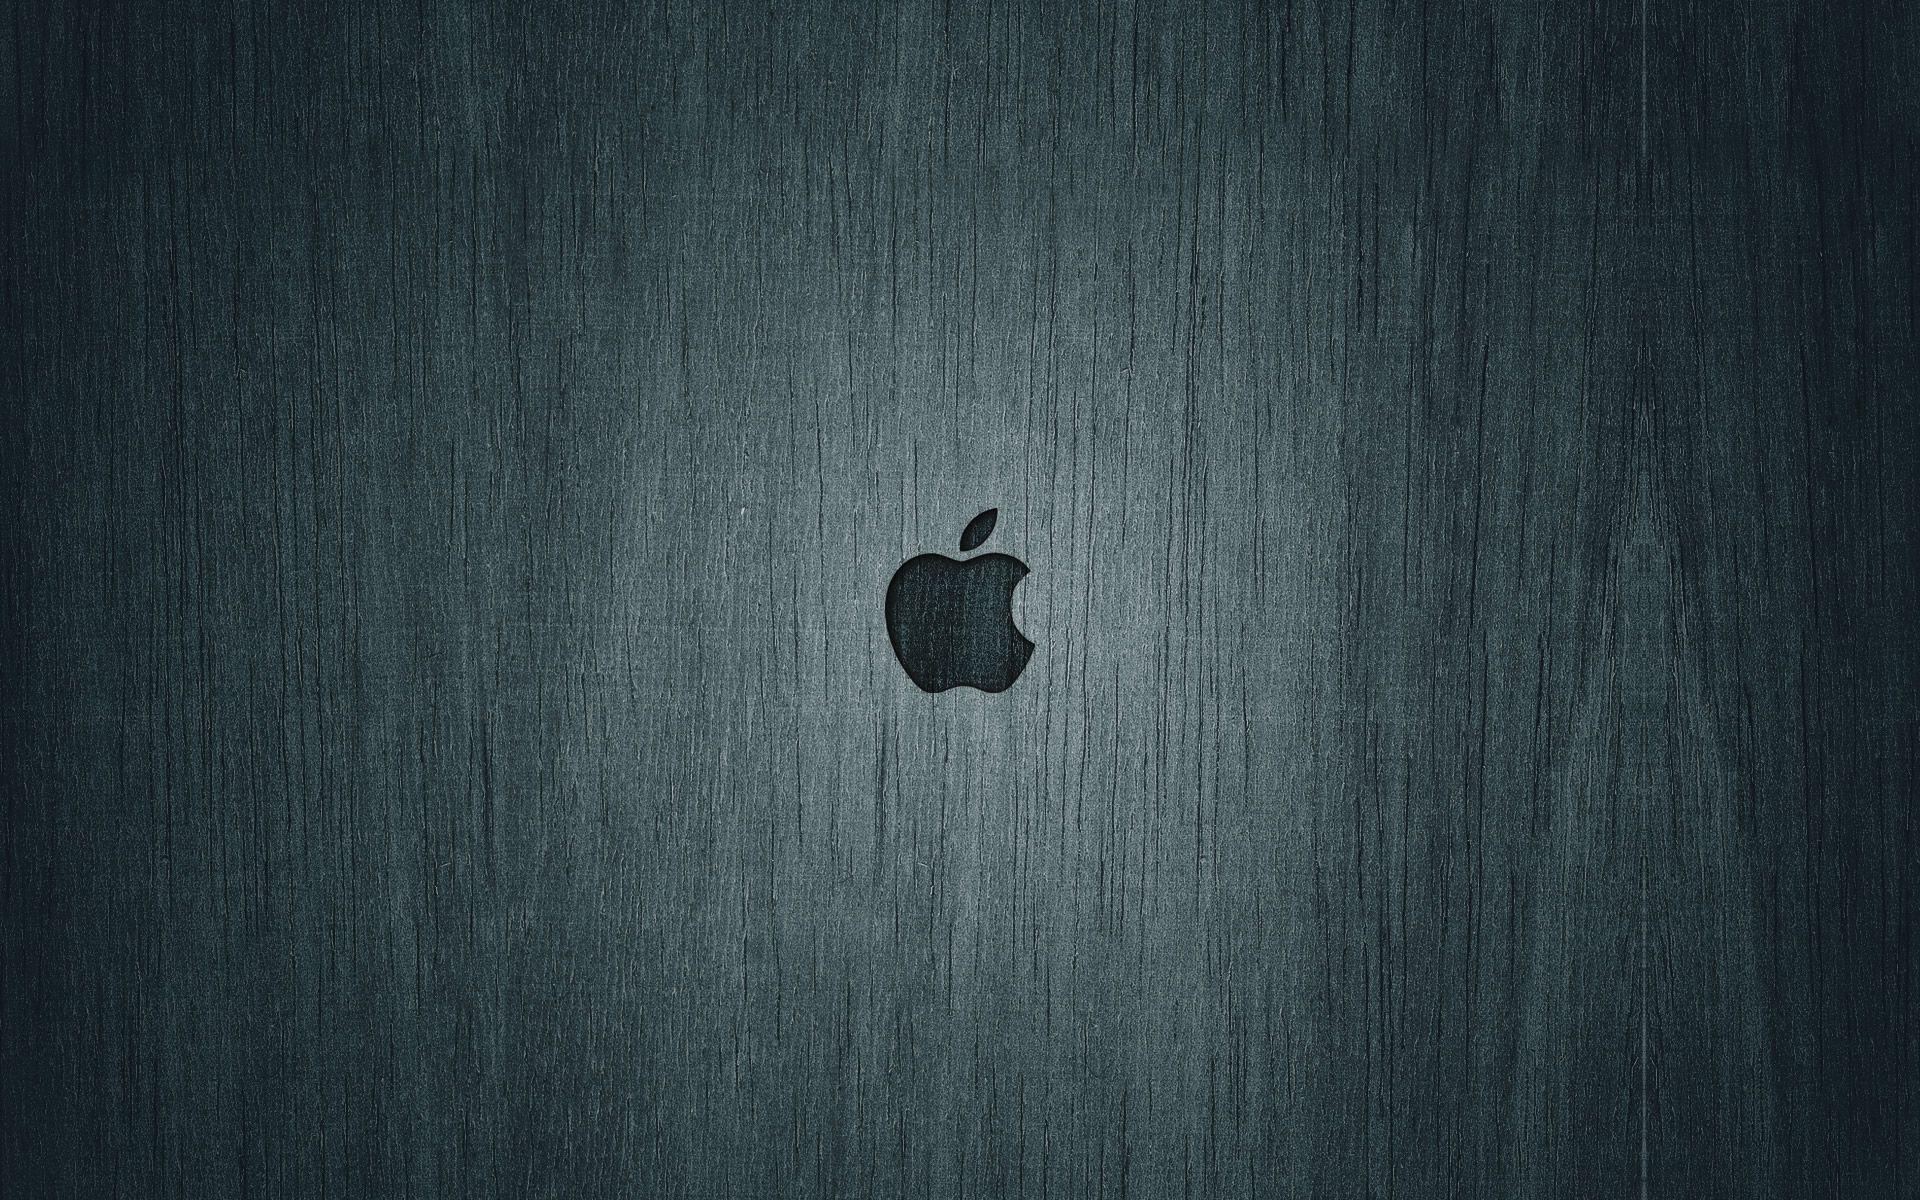 Free Download apple desktop background wallpaper with original